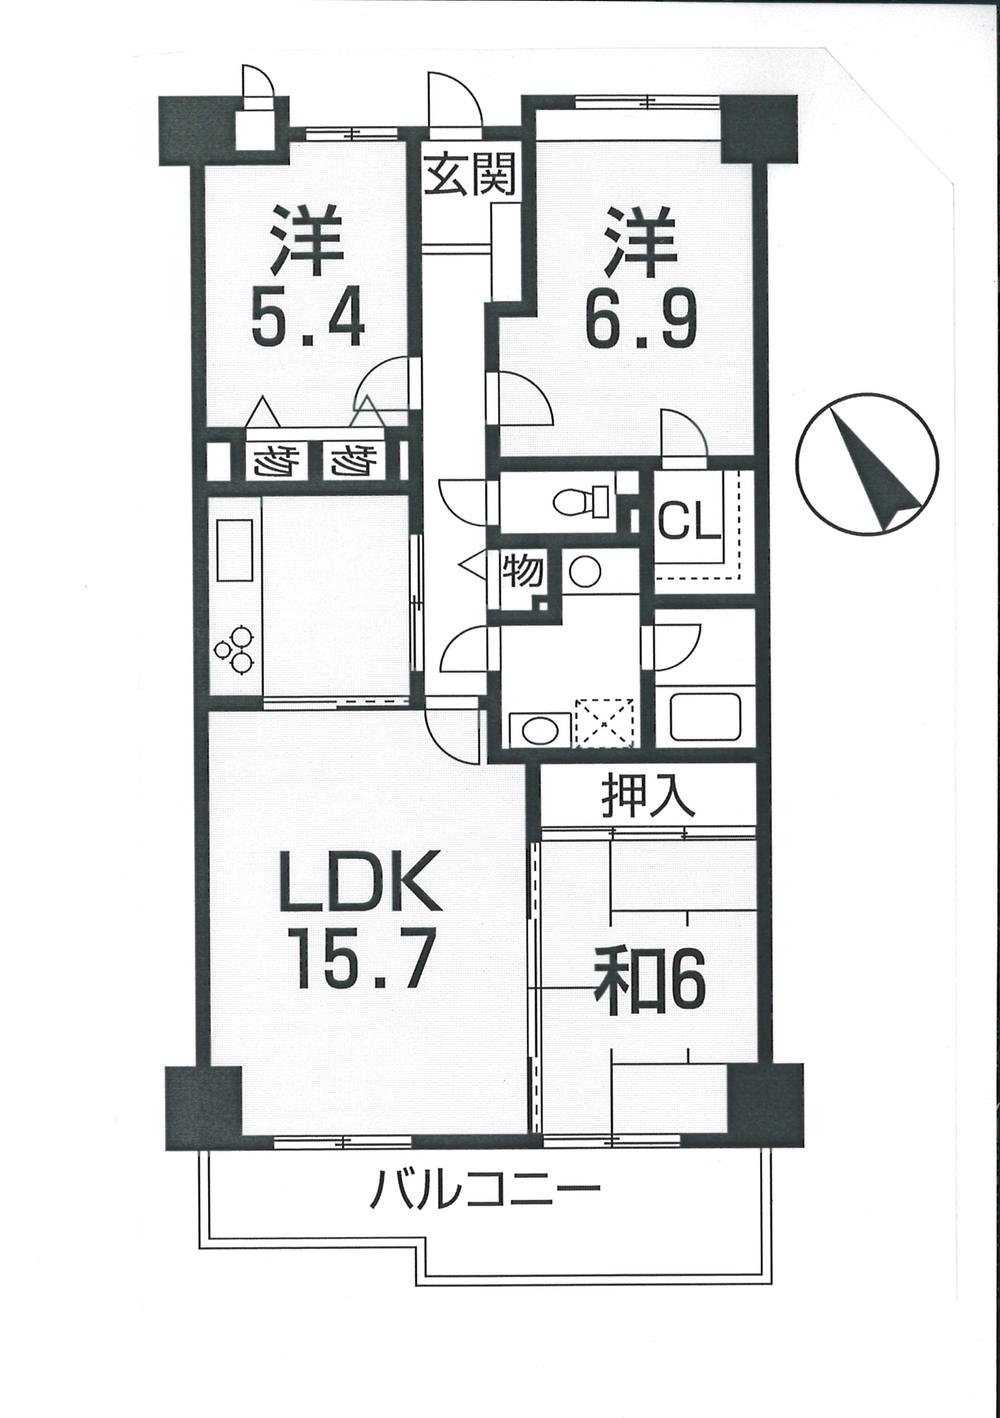 Floor plan. 3LDK, Price 13,900,000 yen, Footprint 78.5 sq m , Balcony area 10.83 sq m